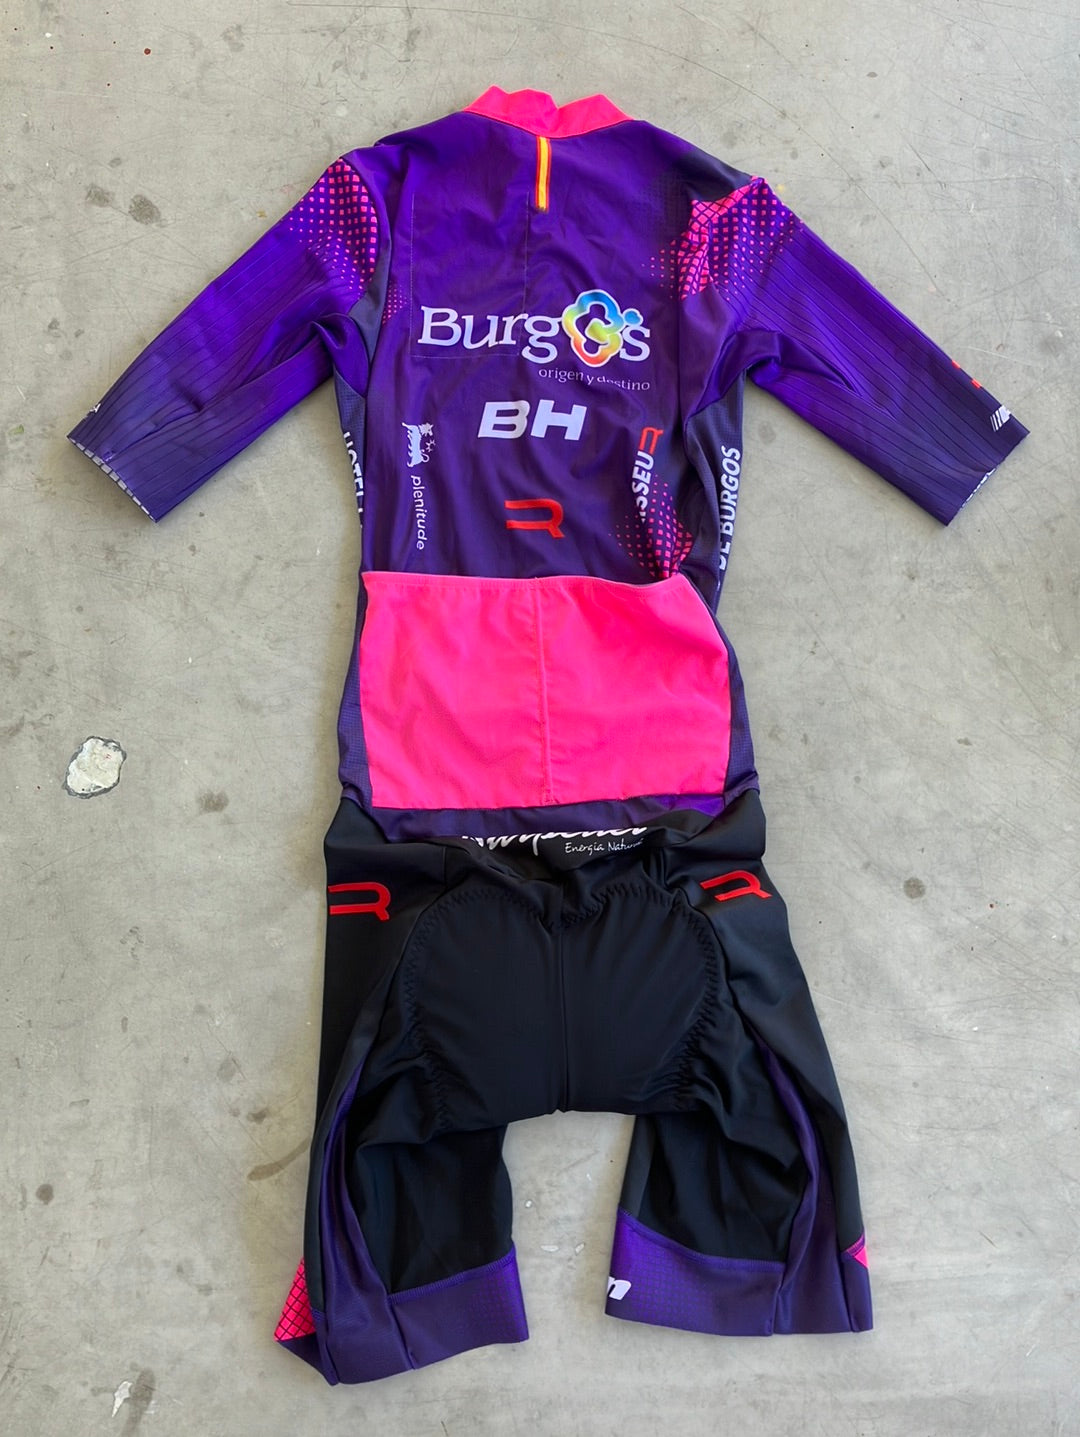 Burgos BH | Finisseur Race Suit | M | Purple | Pro-Issued Team Kit ...